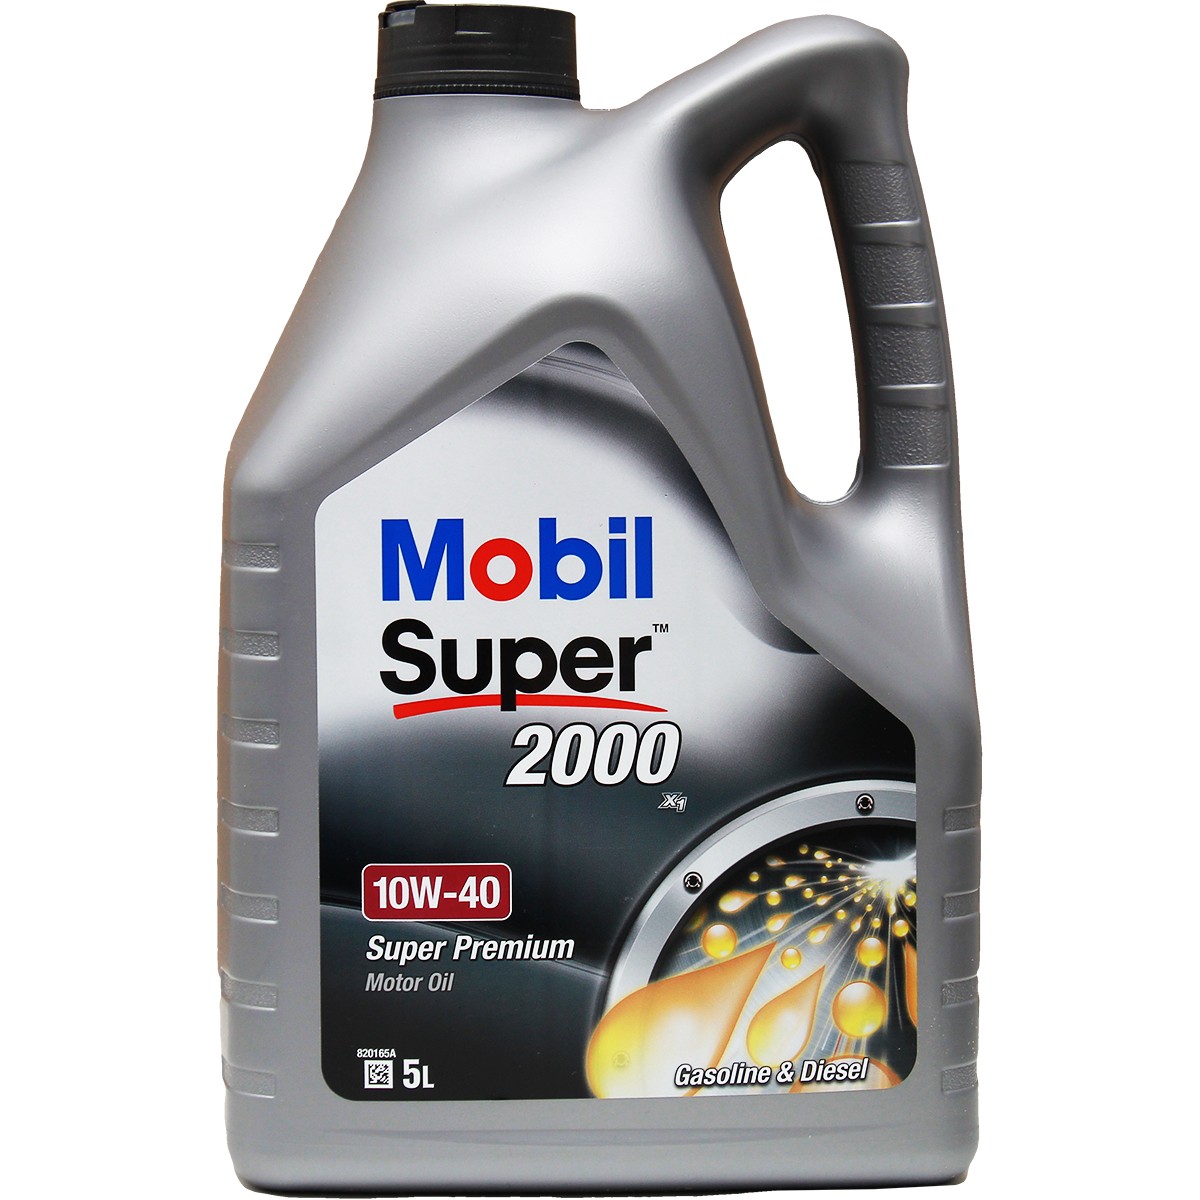 MOBIL Super, 2000 X1 10W-40, 5l, Part Synthetic Oil Motor oil 150563 buy